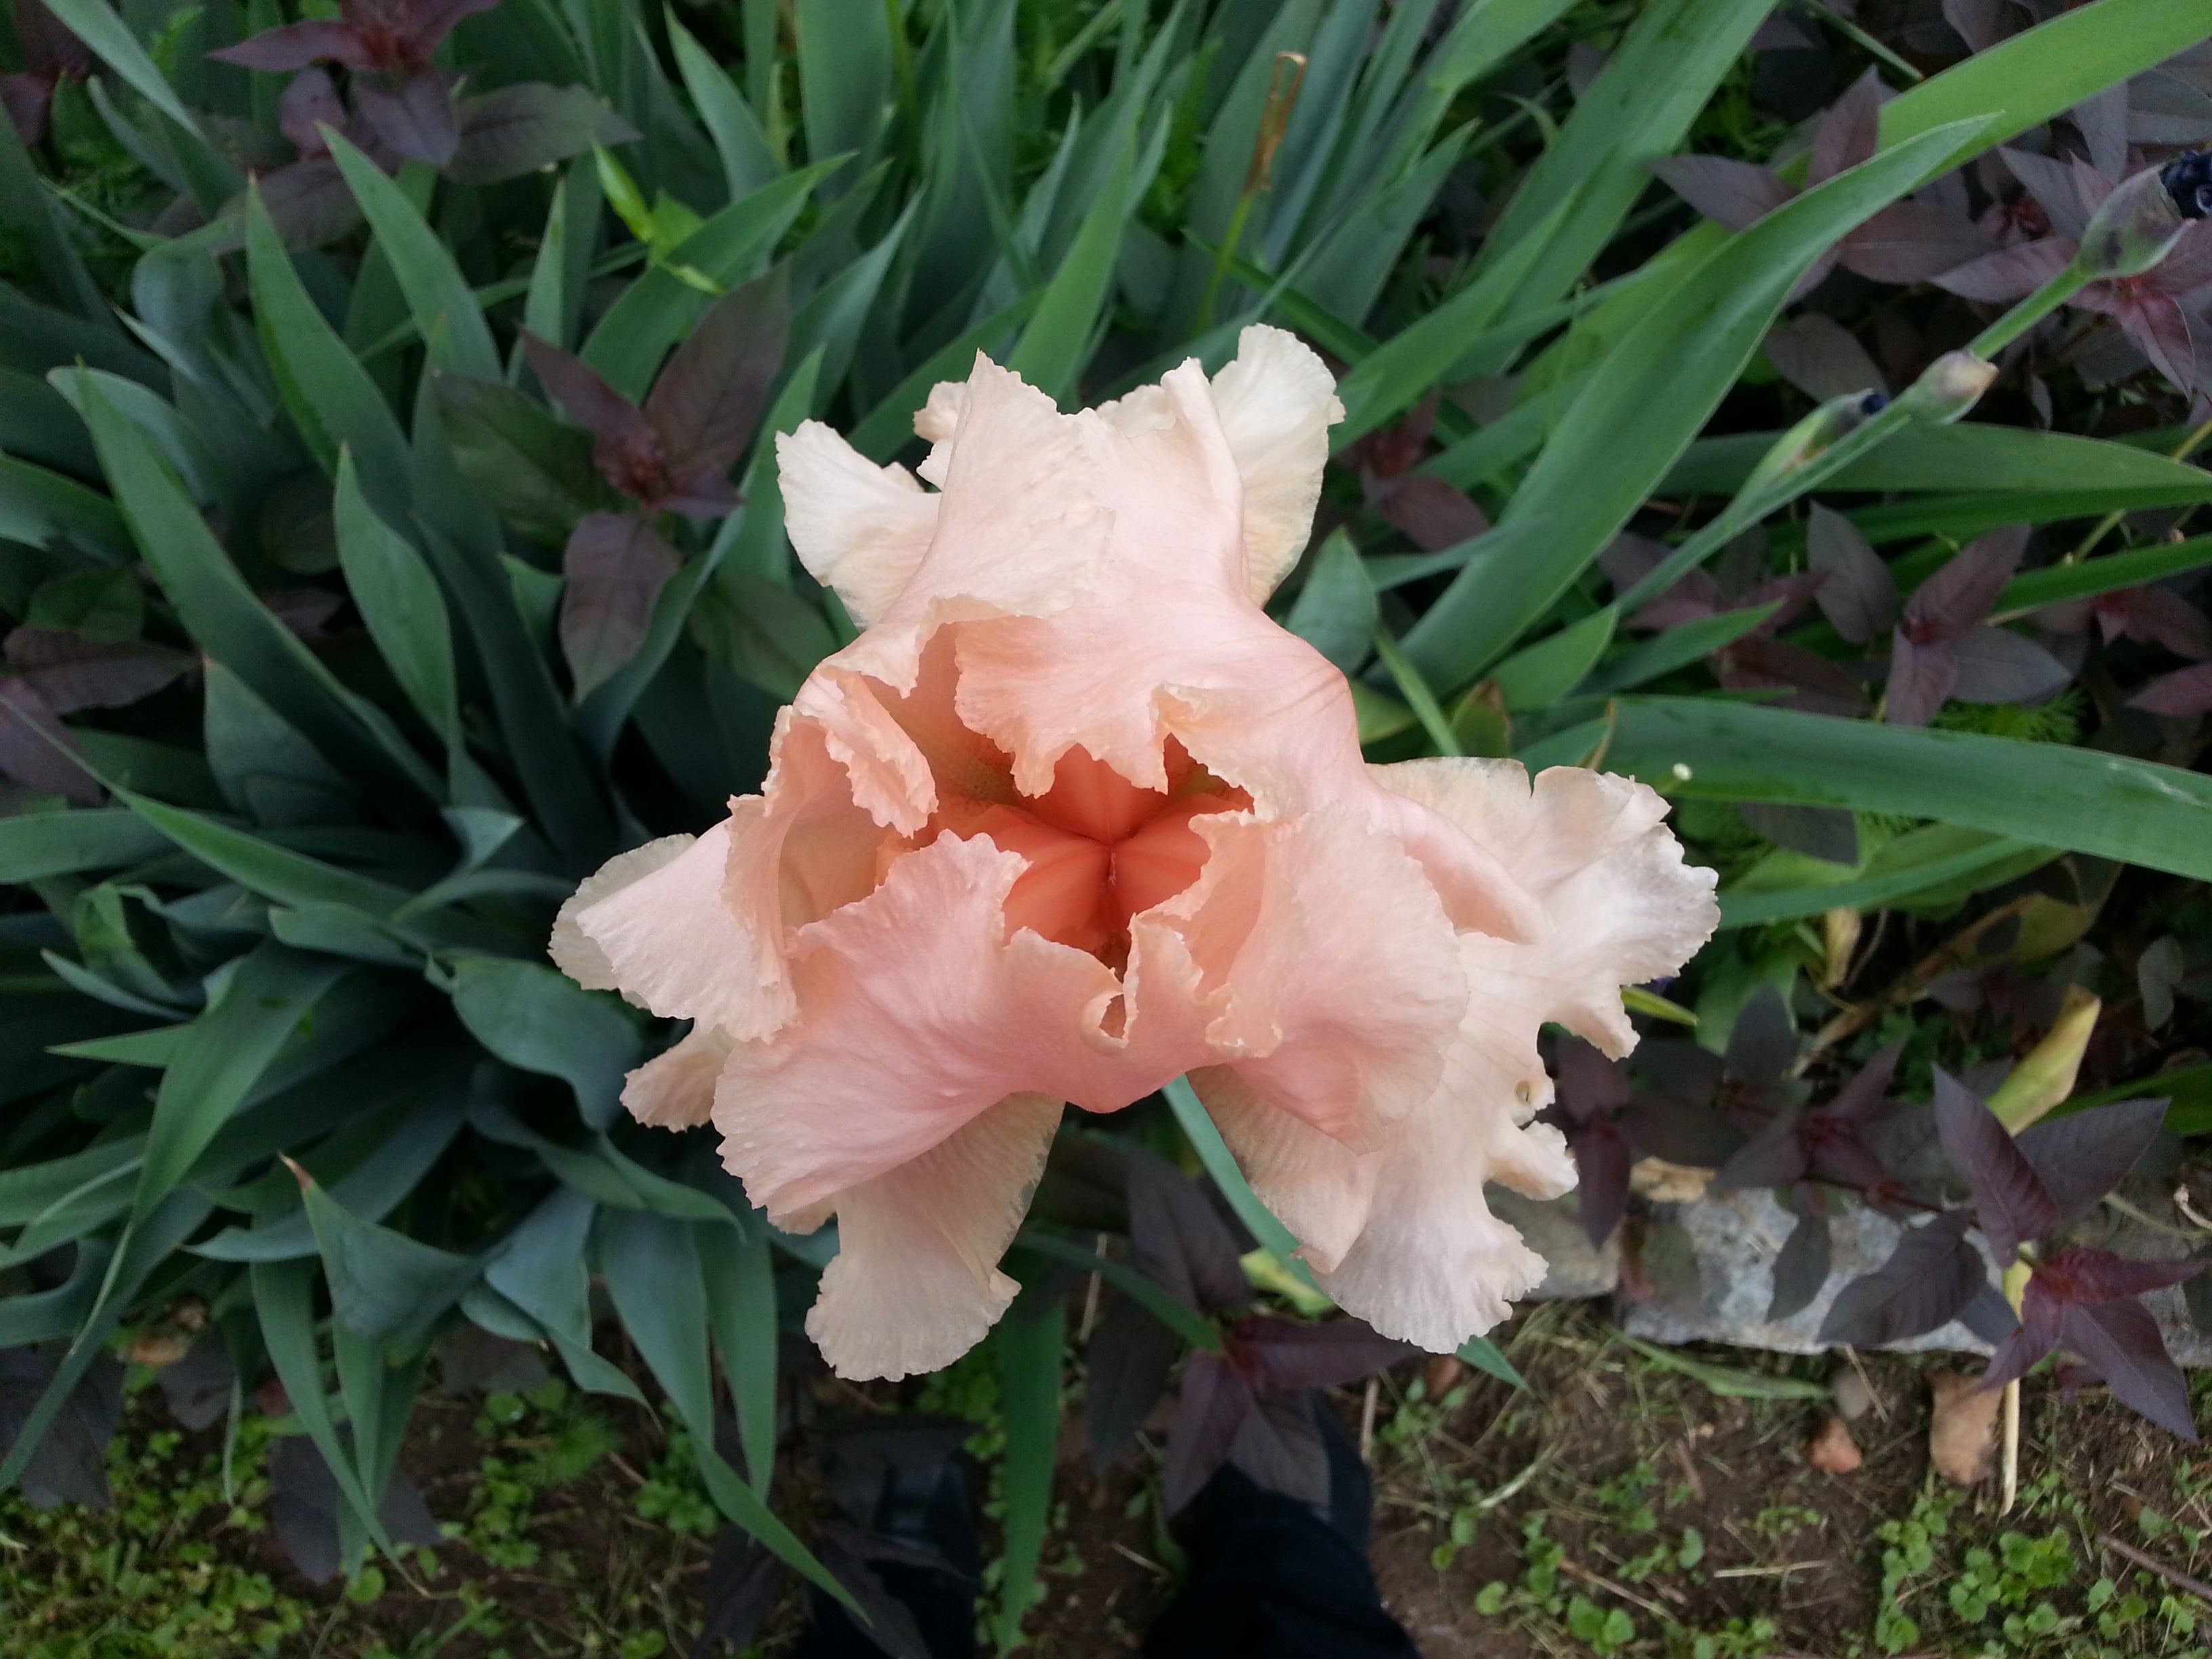 An iris in bloom at Summer Winter Community Garden